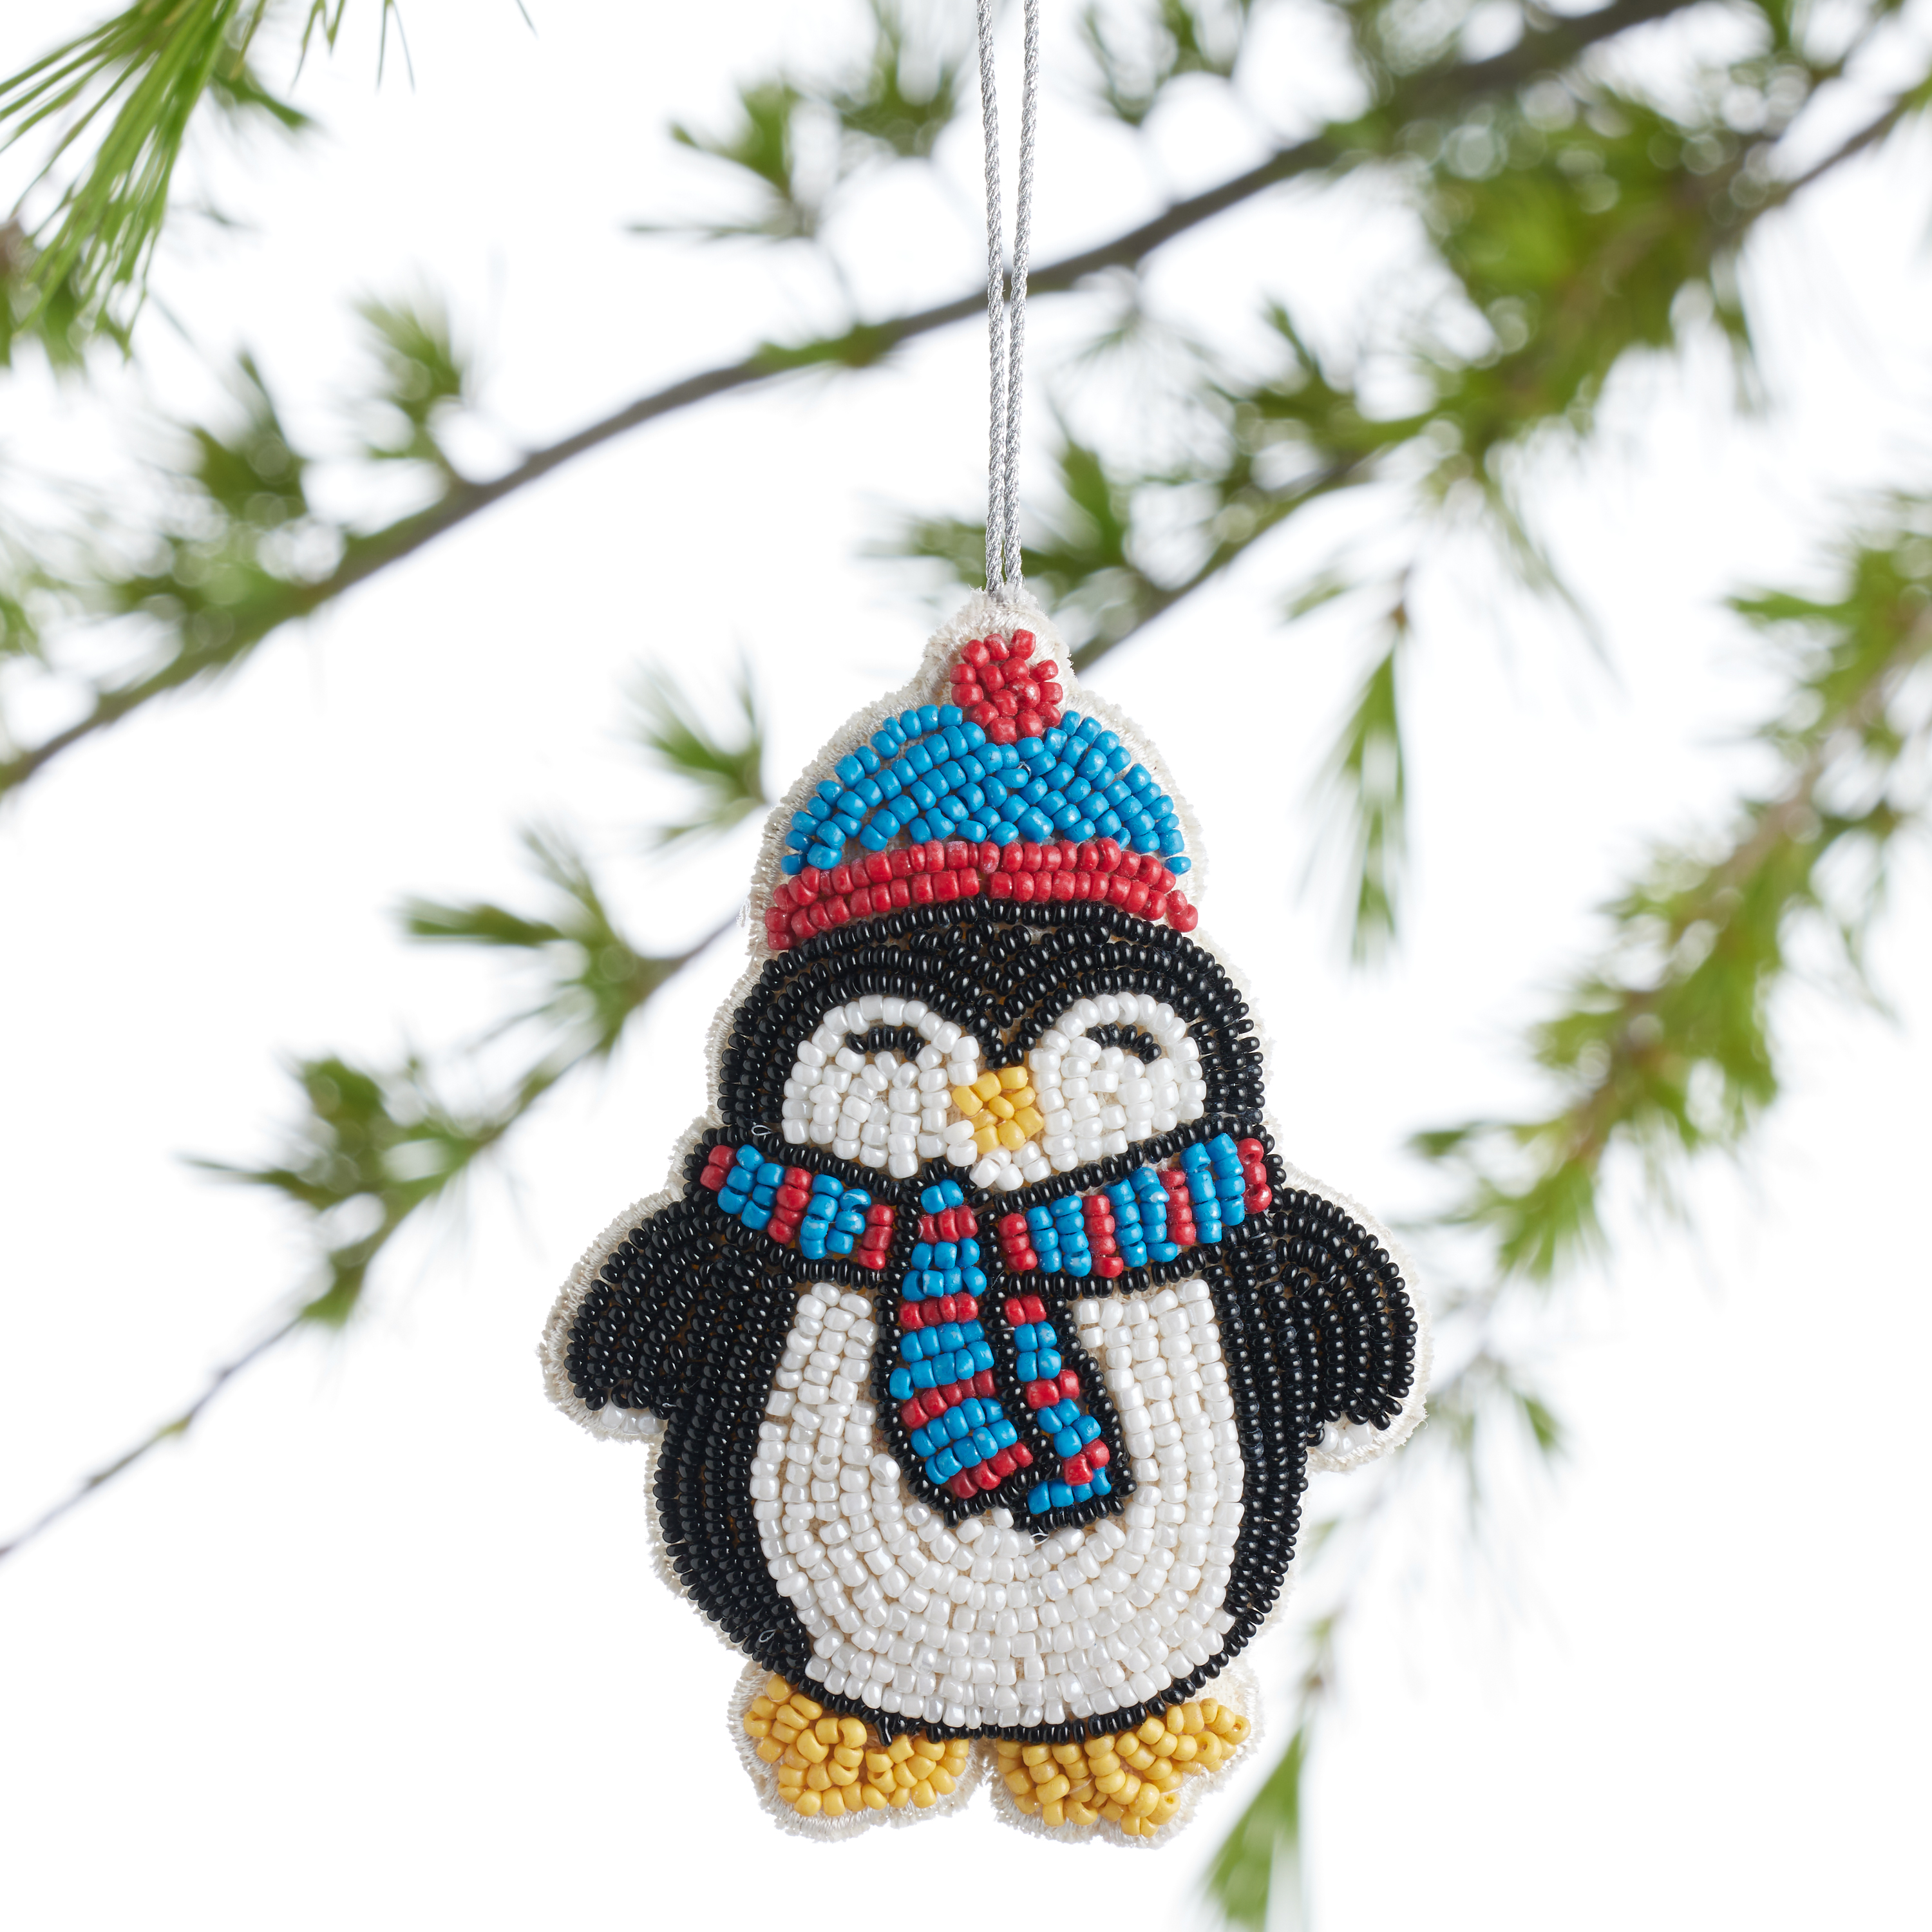 Wonderland ~ Blue Christmas Ball Cross Stitch Ornament Kit FLW-008